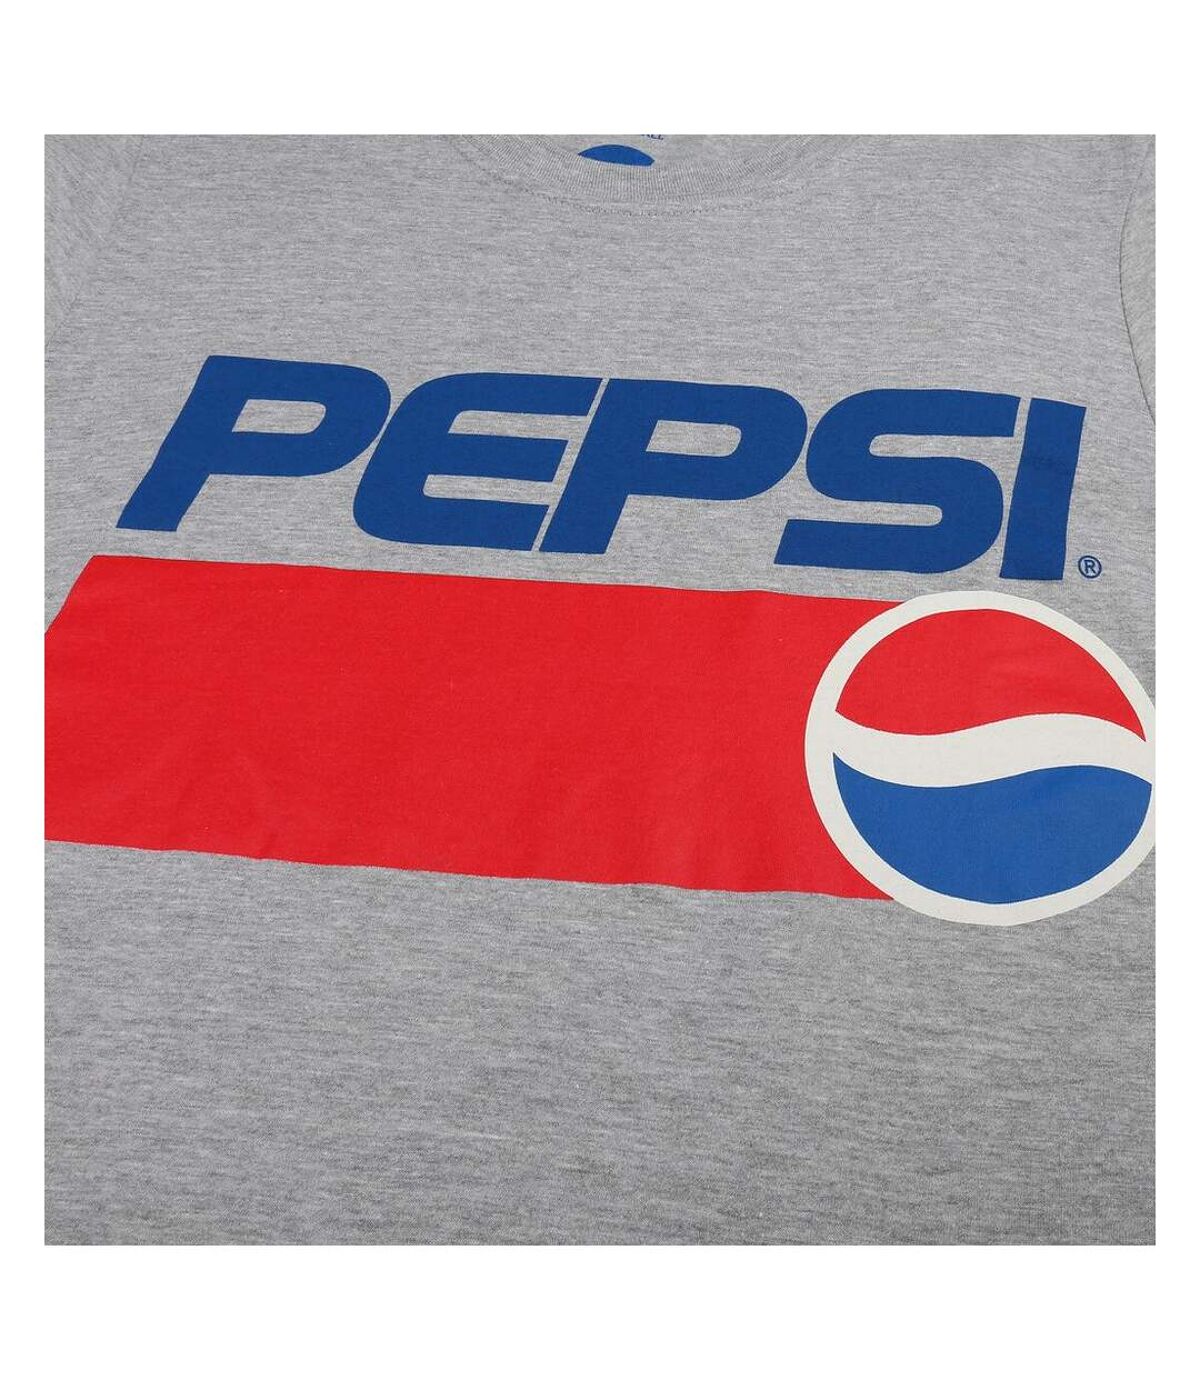 Pepsi Womens/Ladies 1991 T-Shirt (Sports Grey/Blue/Red)